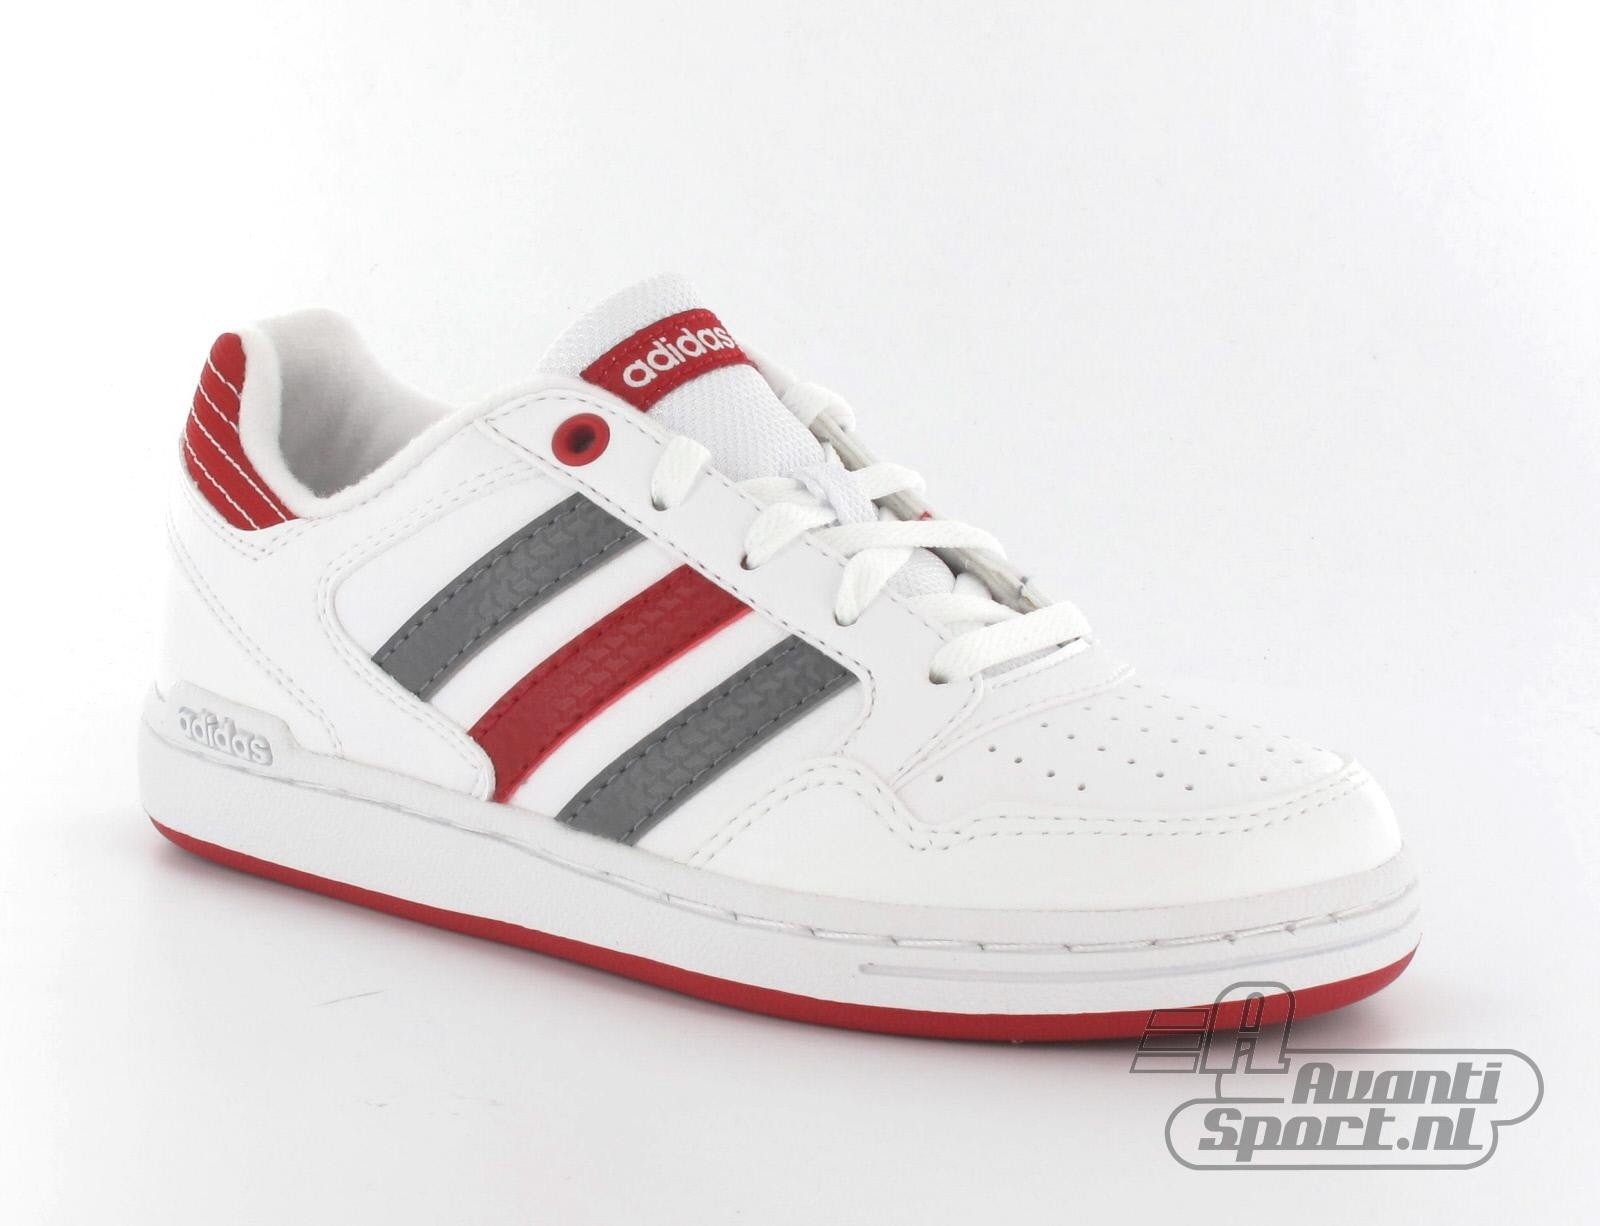 Avantisport - Adidas - Driscoll Kids - Adidas Sneakers